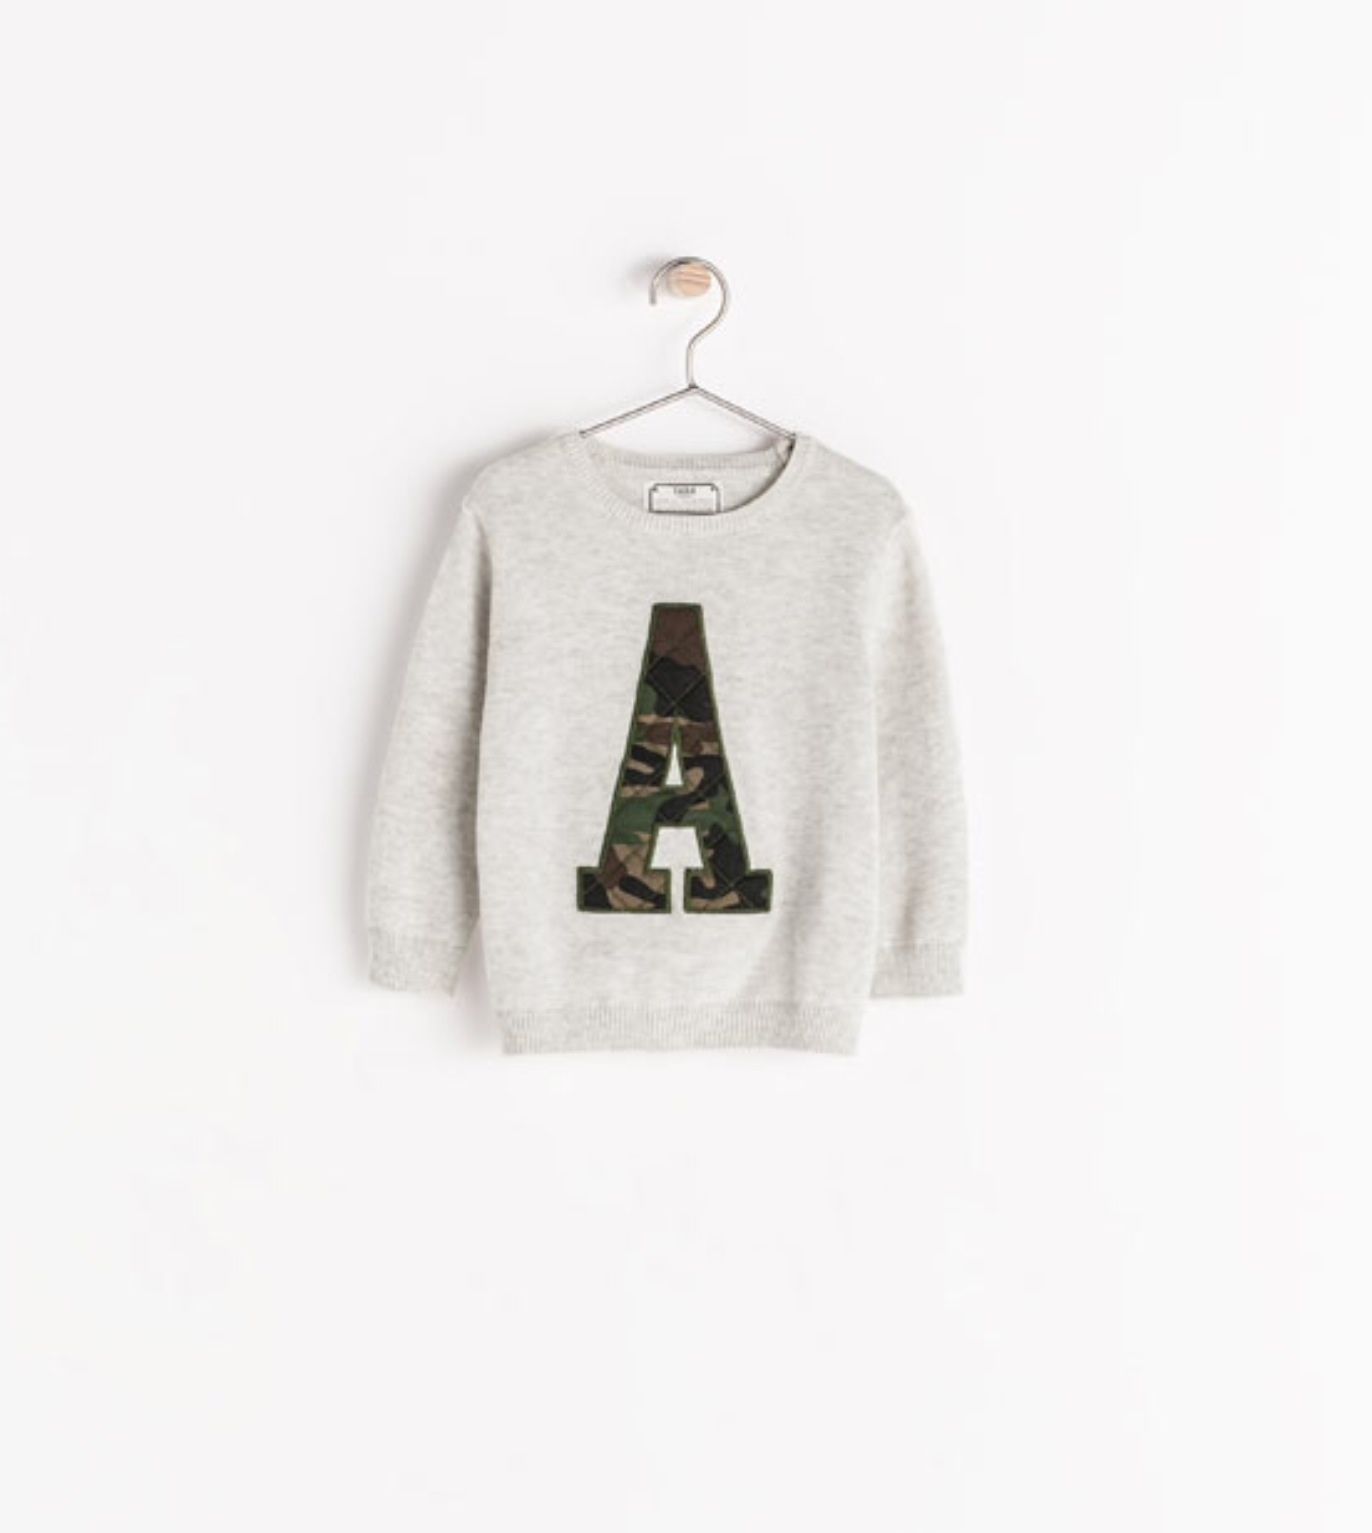 Zara Letter Sweater